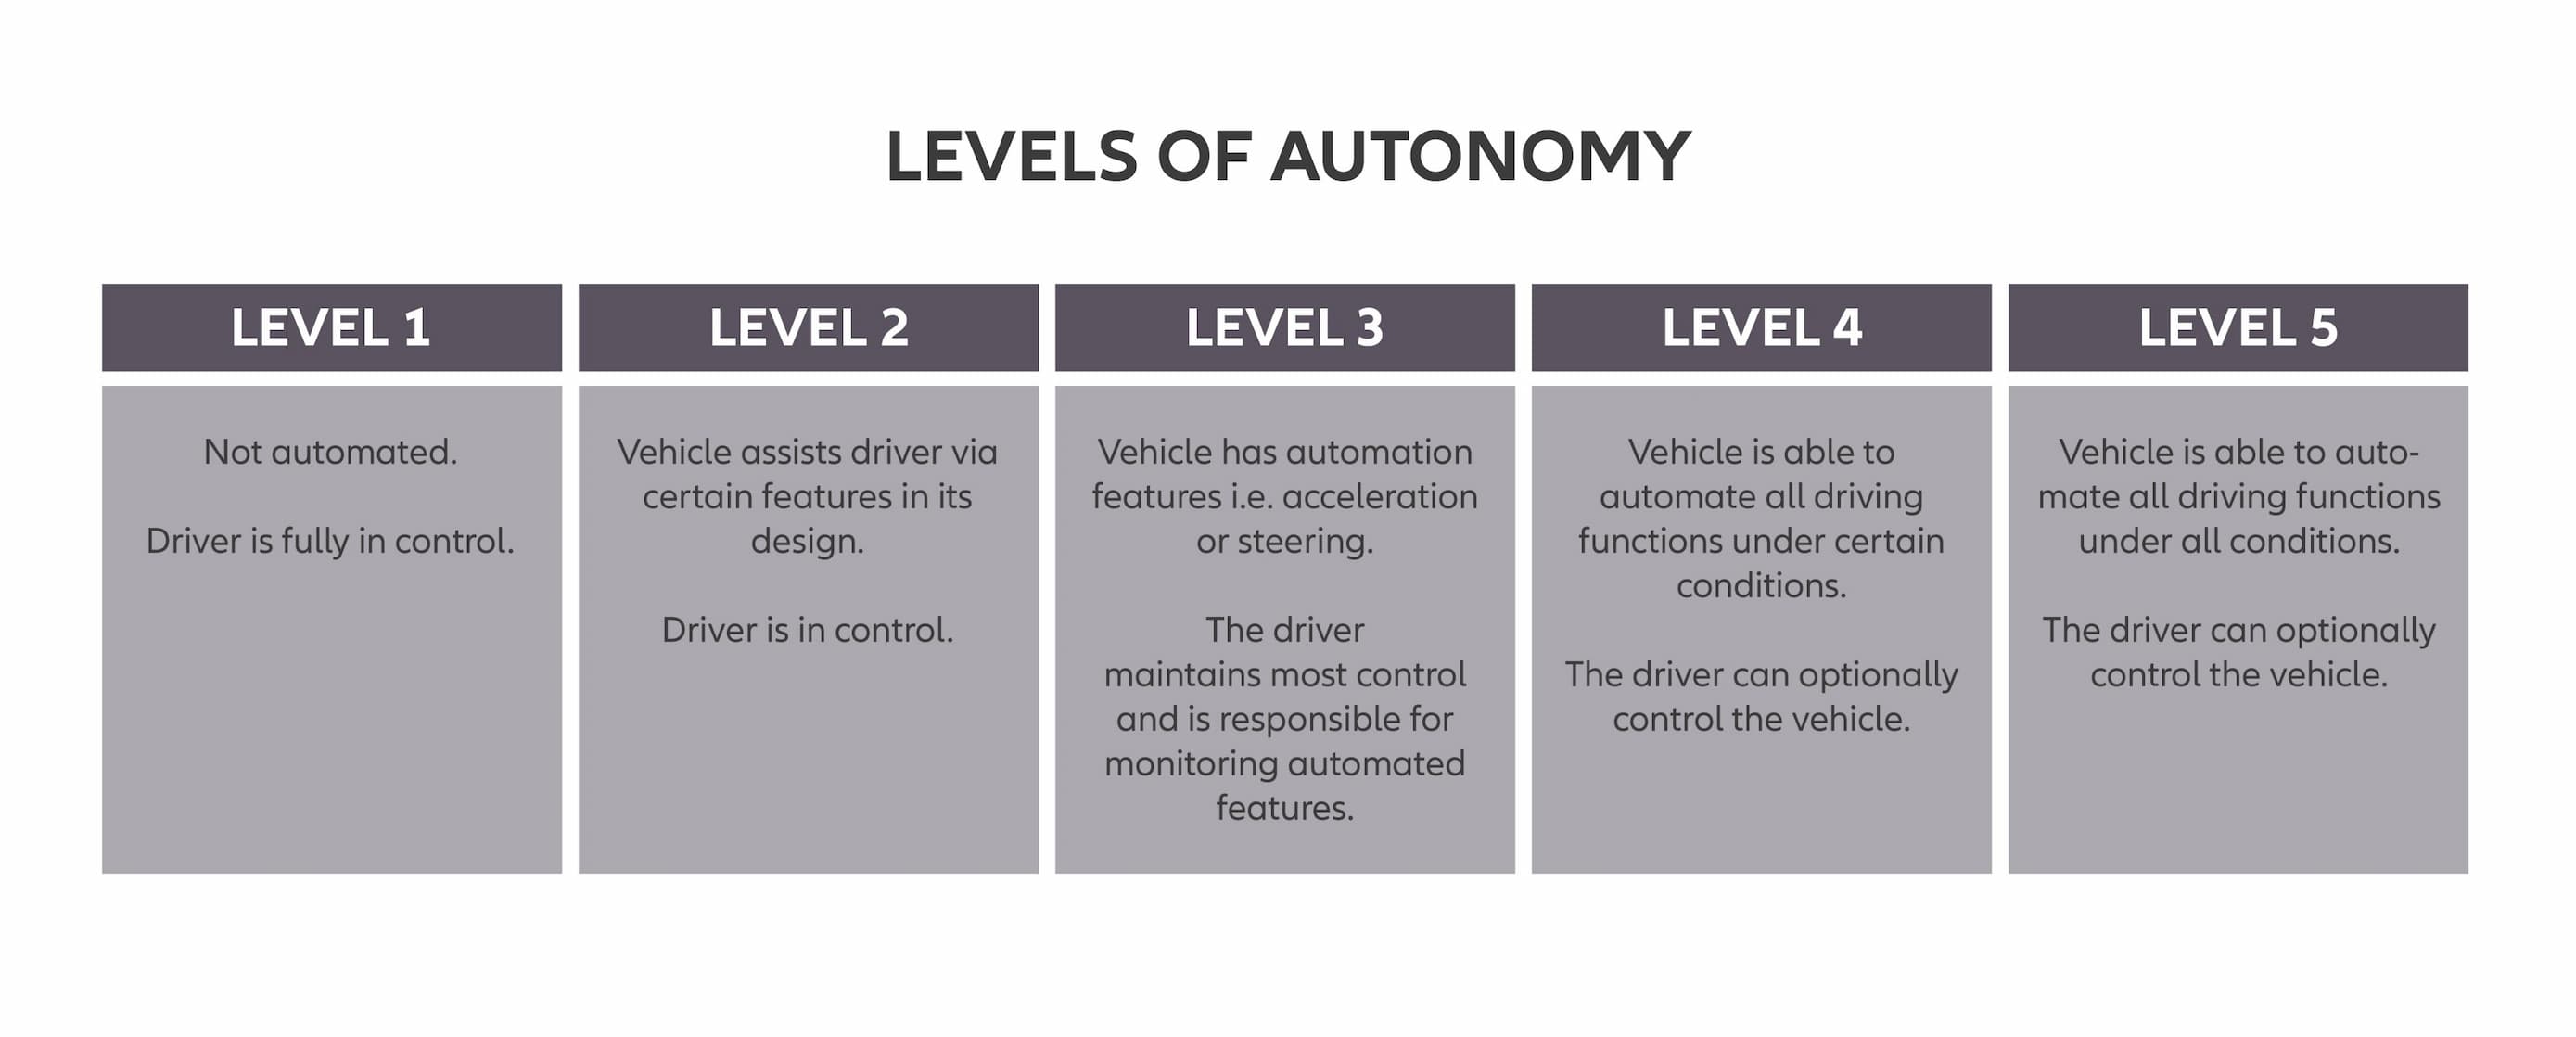 autonomy level information poster